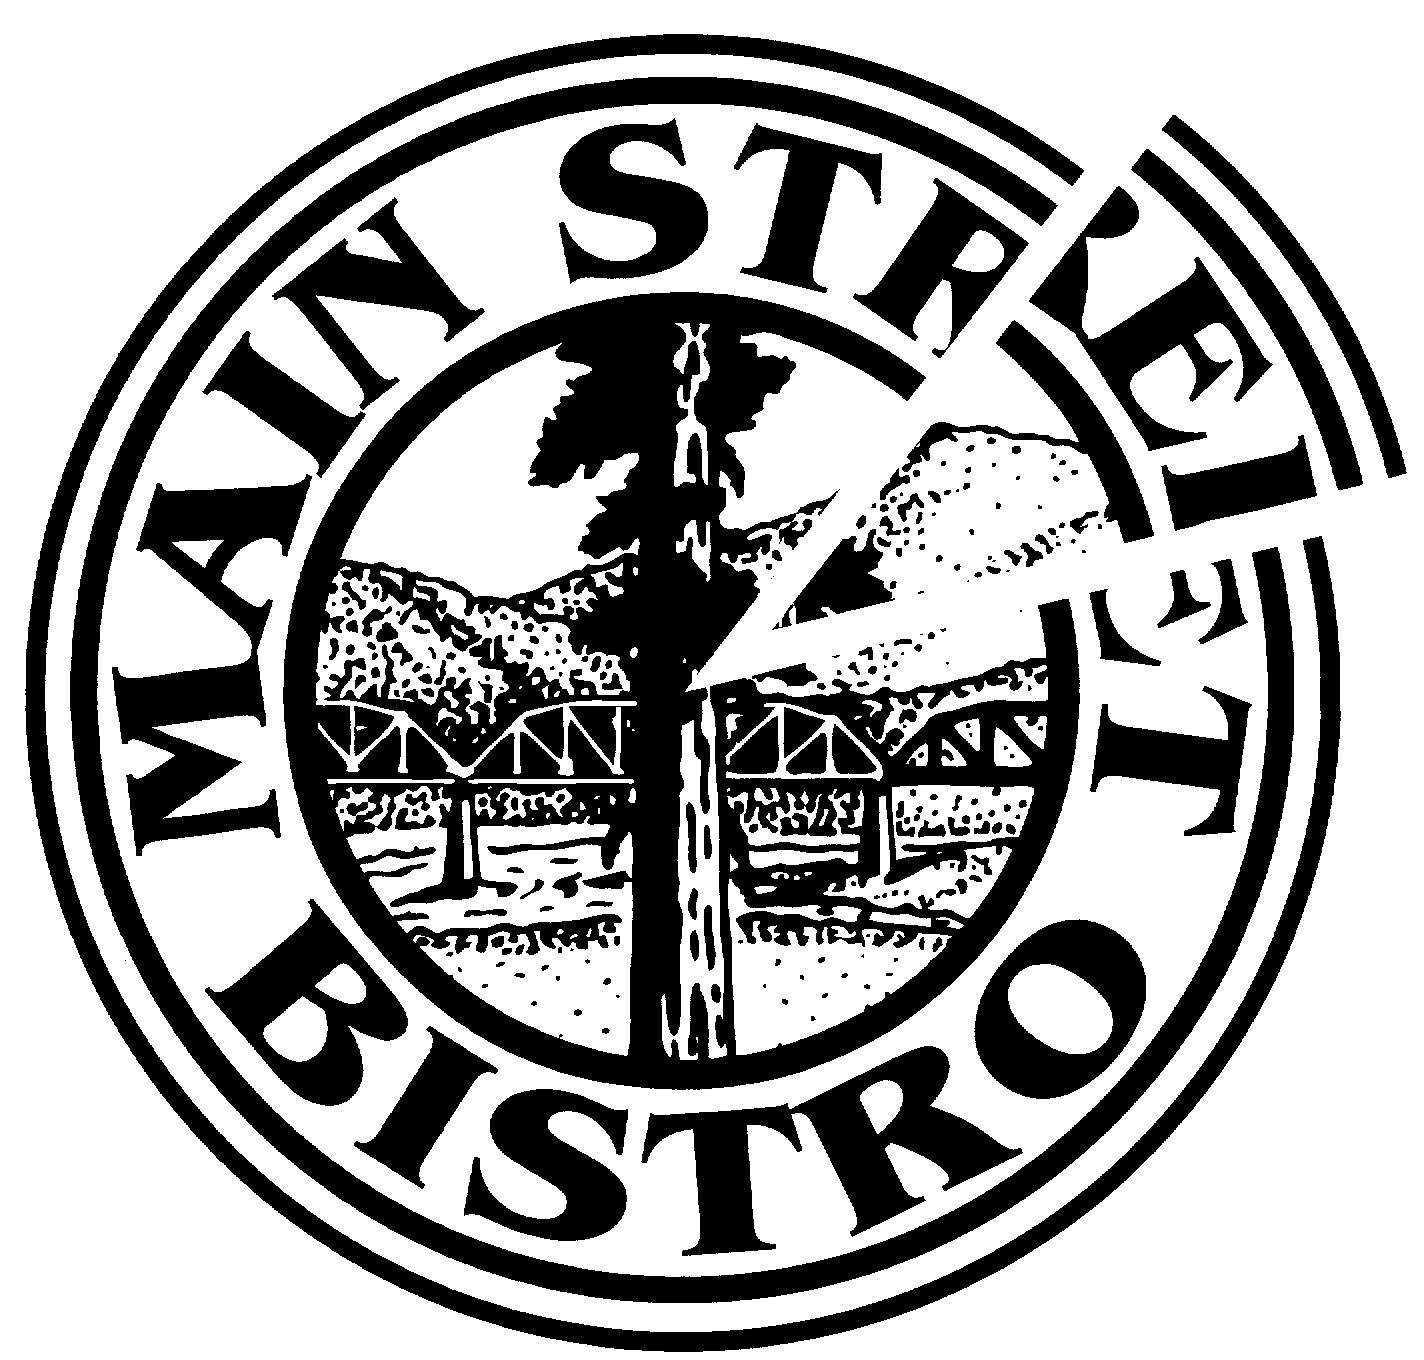 Main Street Bistro Logo